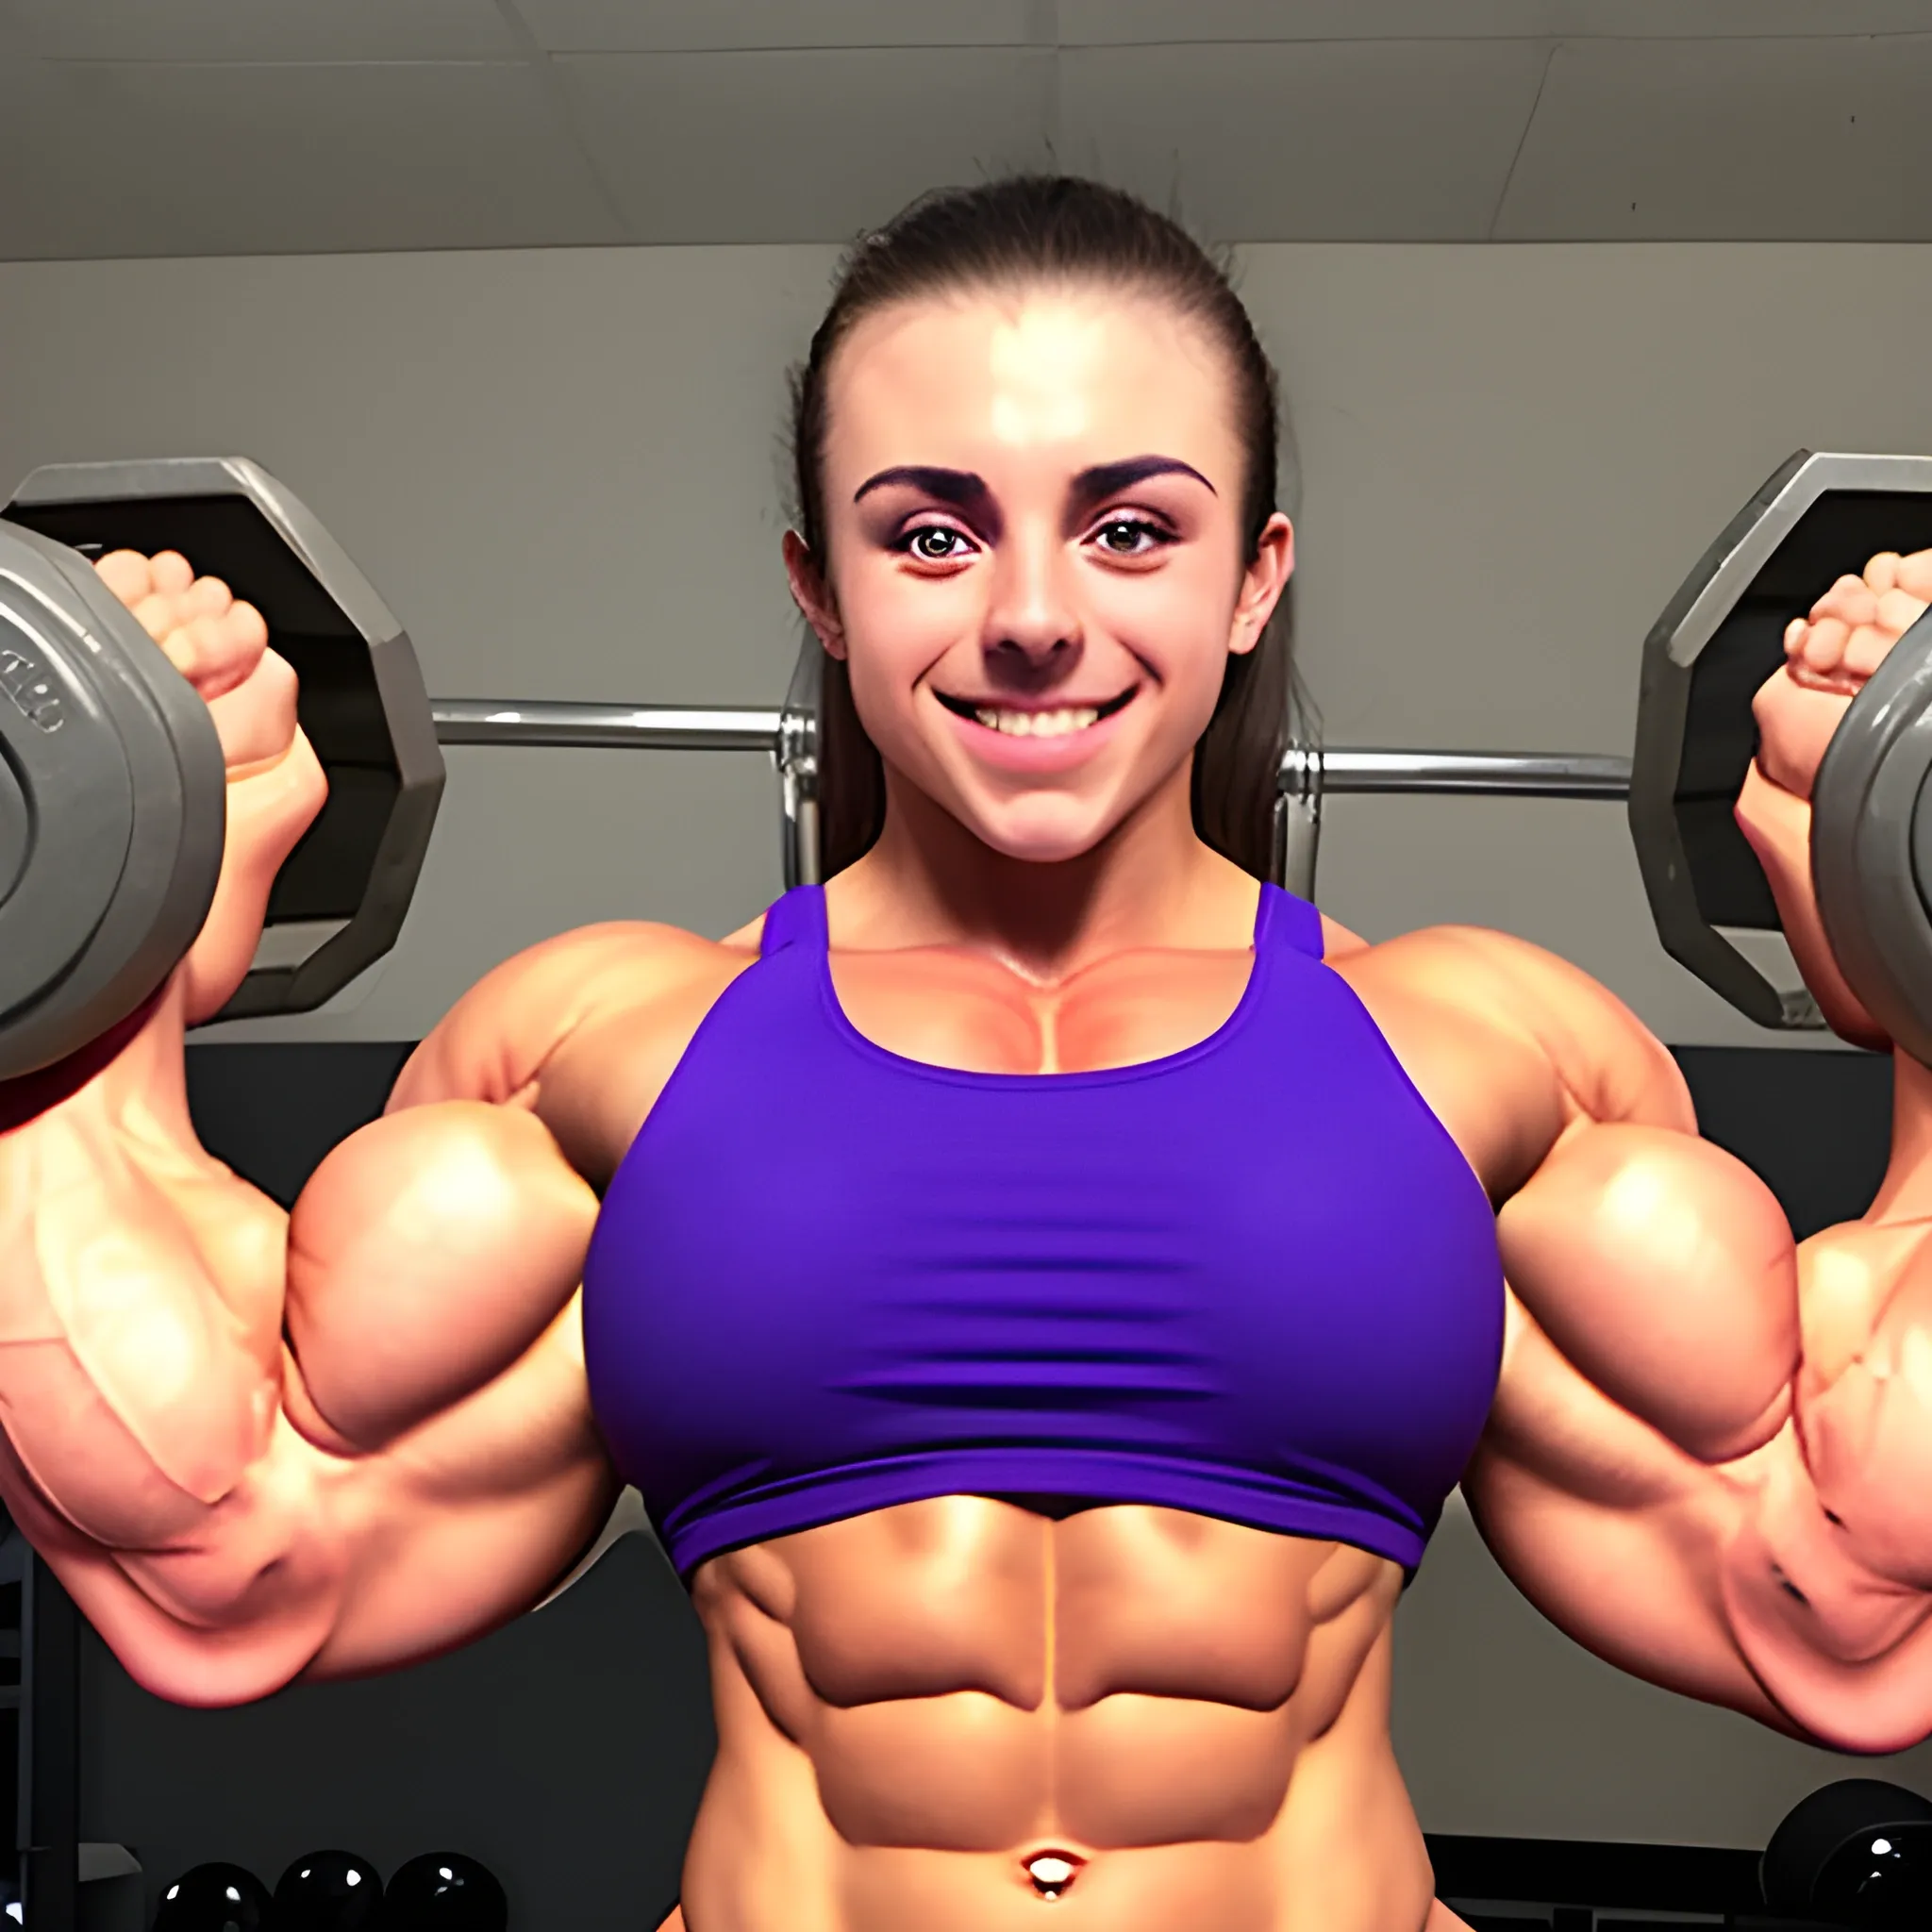 20 year old, hyper-muscled female bodybuilder, 40 inch bicep